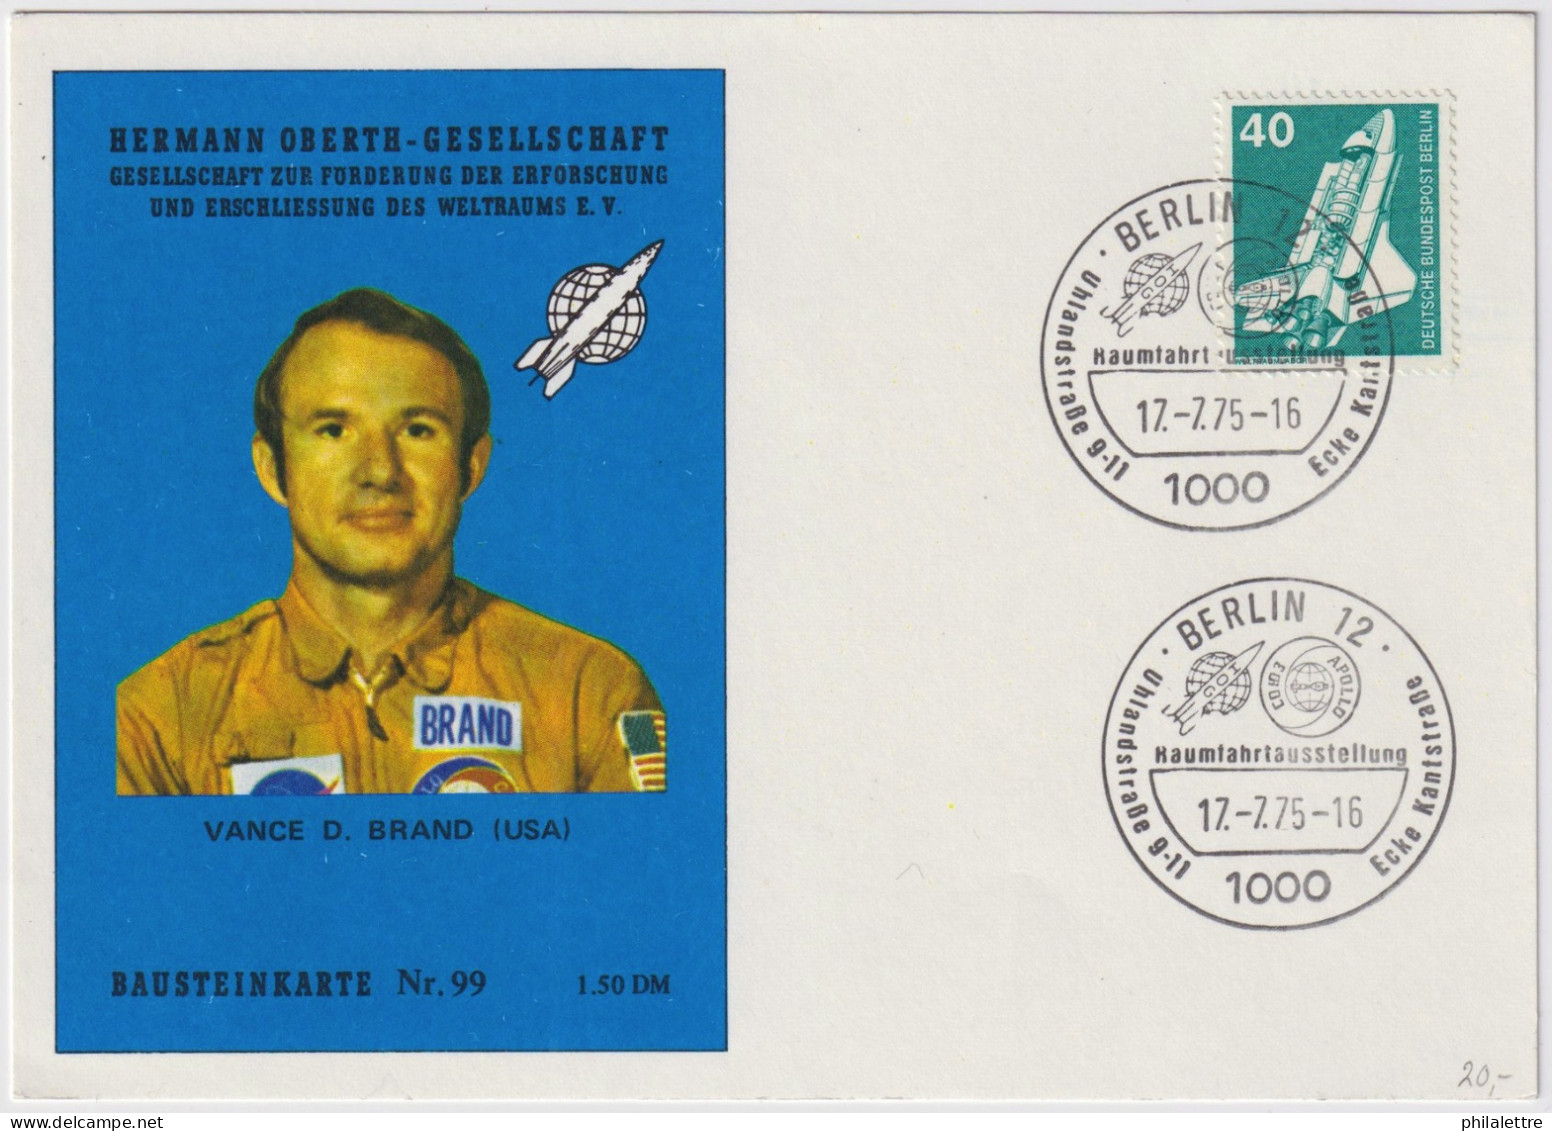 ALLEMAGNE / GERMANY - 1975 Mi.850 40pf Spacelab On Card From The BERLIN RAUMFAHRTAUSSTELLUNG (Bausteinkarte Nr.99) - Cartas & Documentos